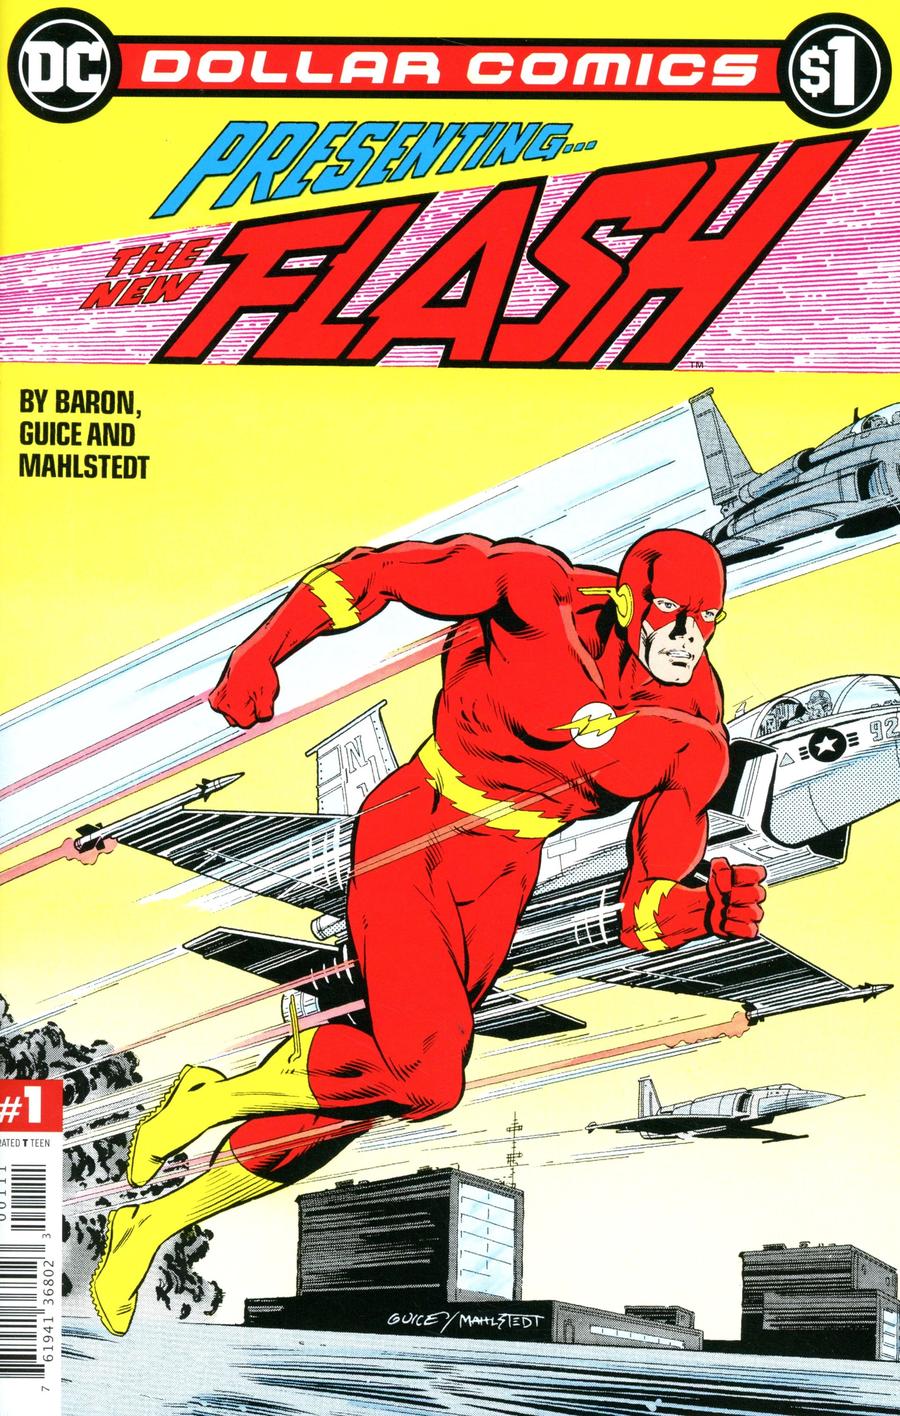 Dollar Comics: Flash 1987 #1 (2020)